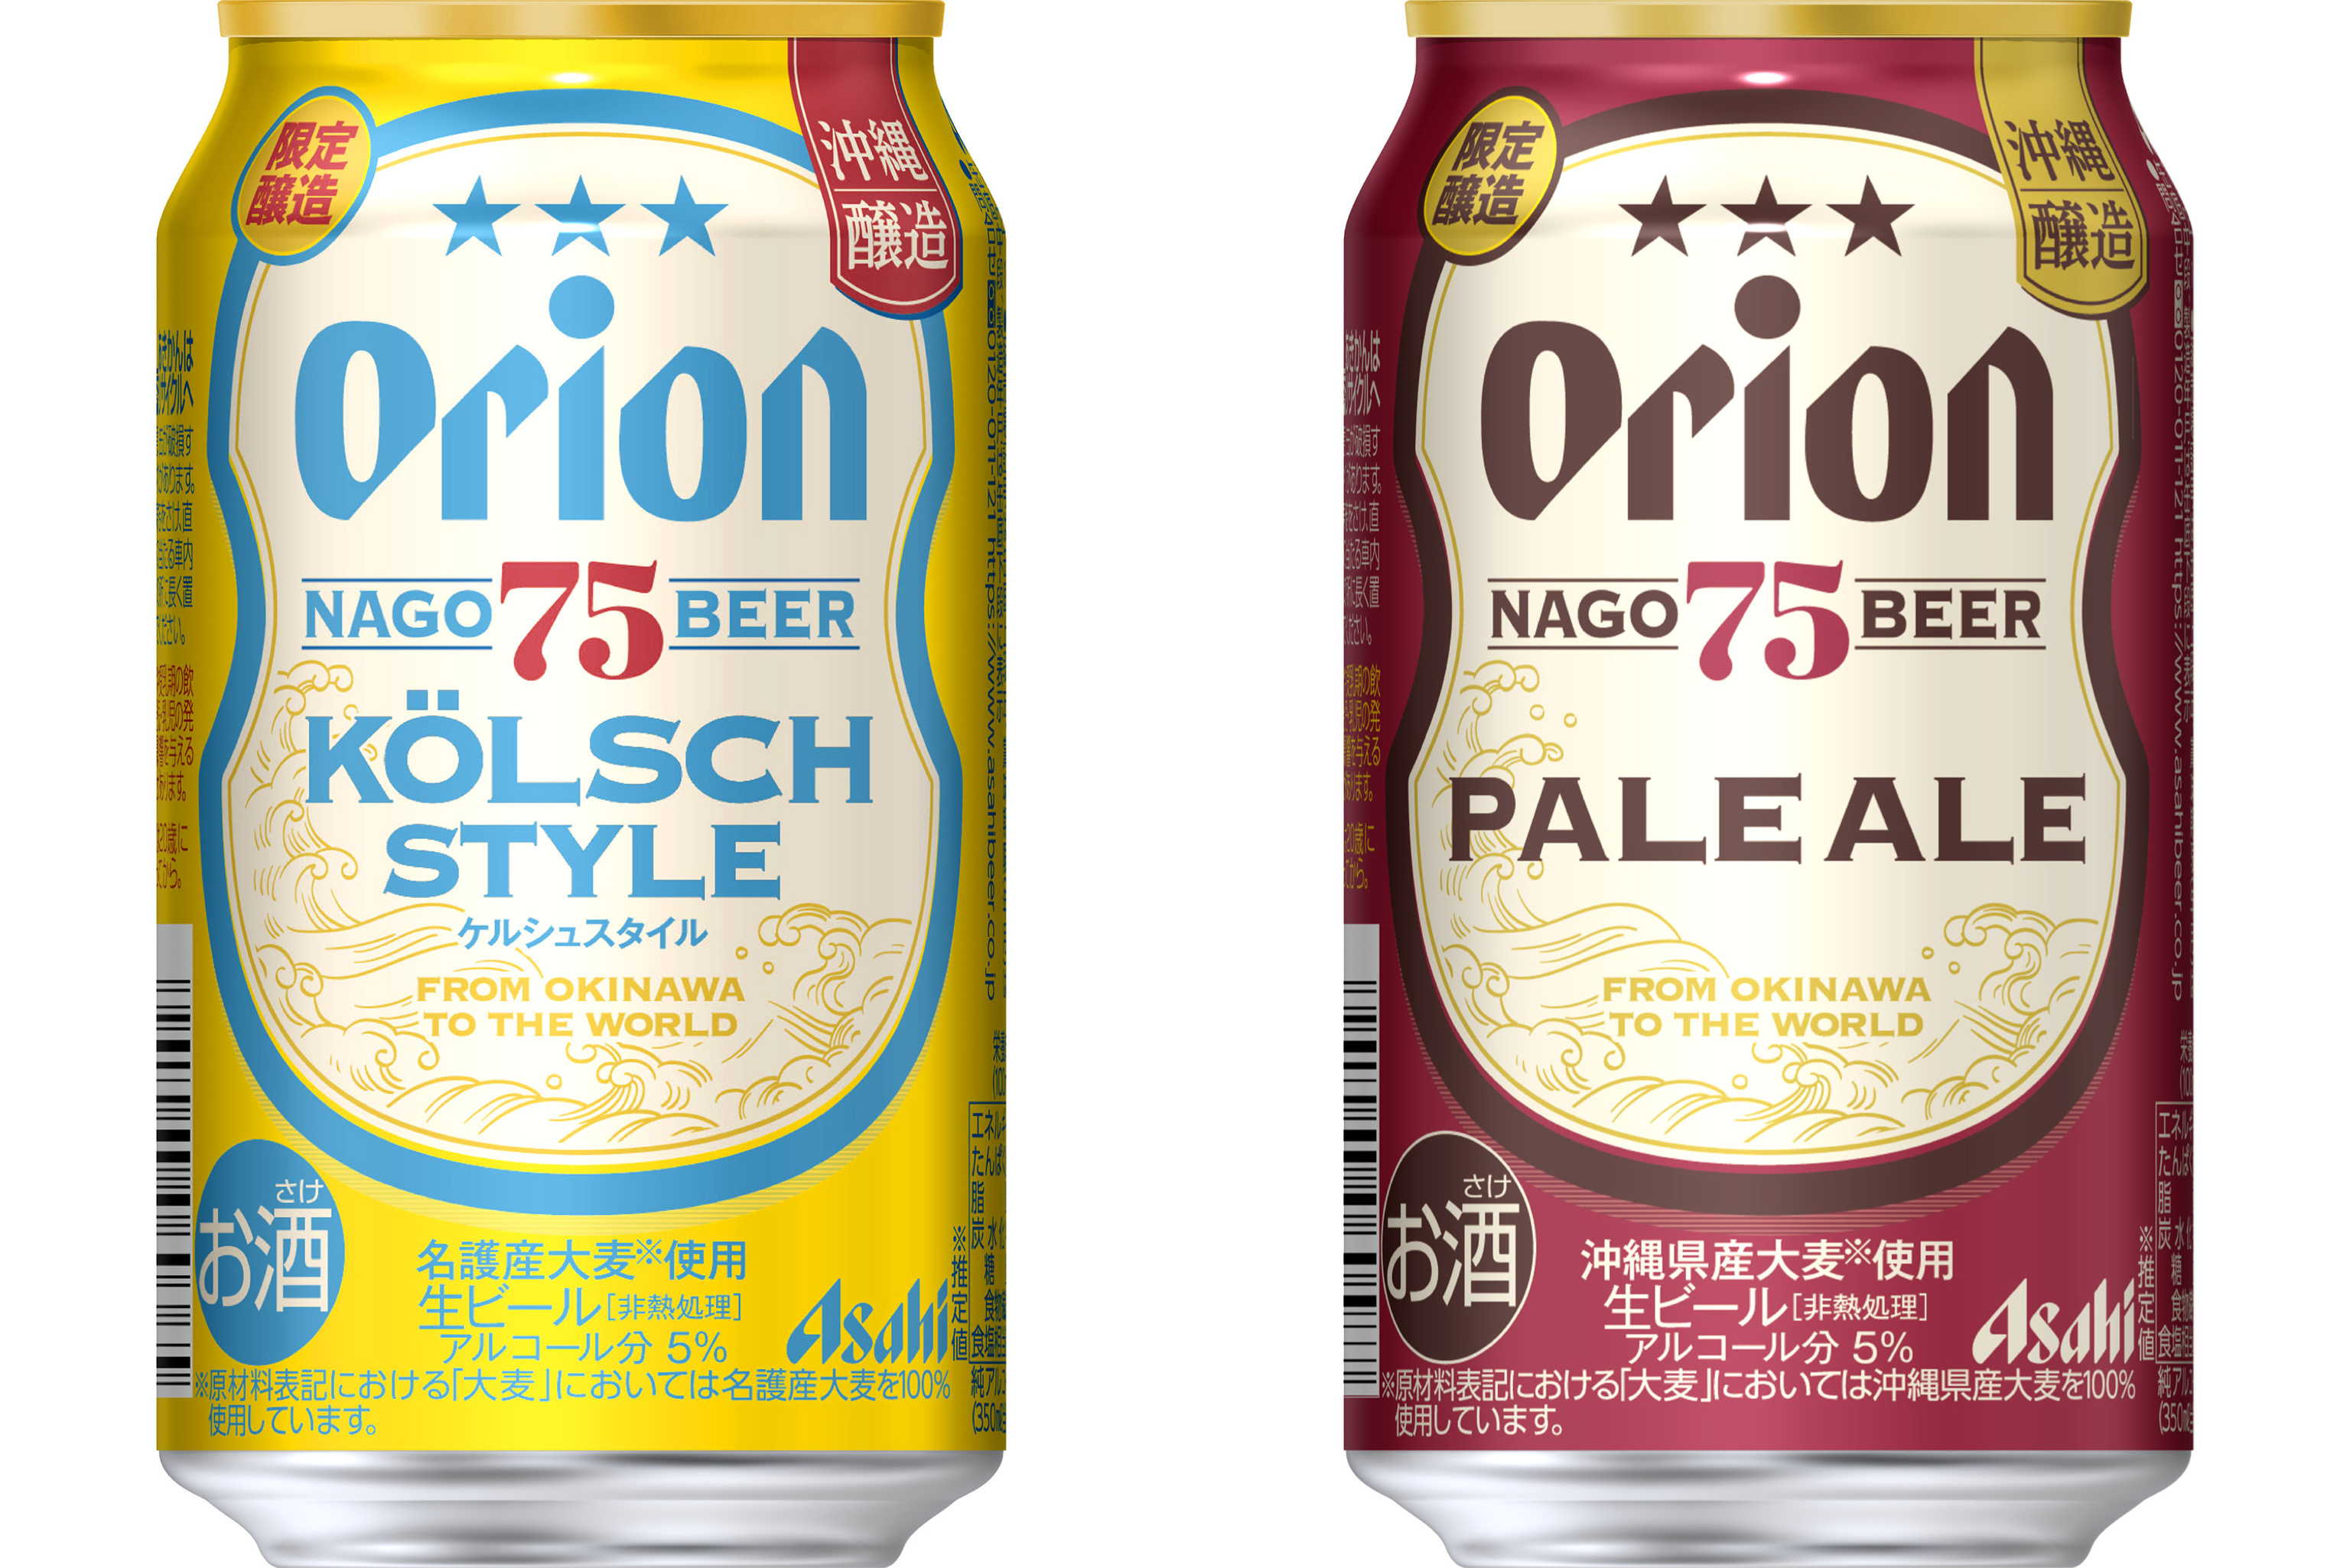 Ashshi Orion 精釀啤酒「75BEER」品牌數量限定商品從8月1日起開始販售，使用沖繩產大麥沖繩名護工廠製造